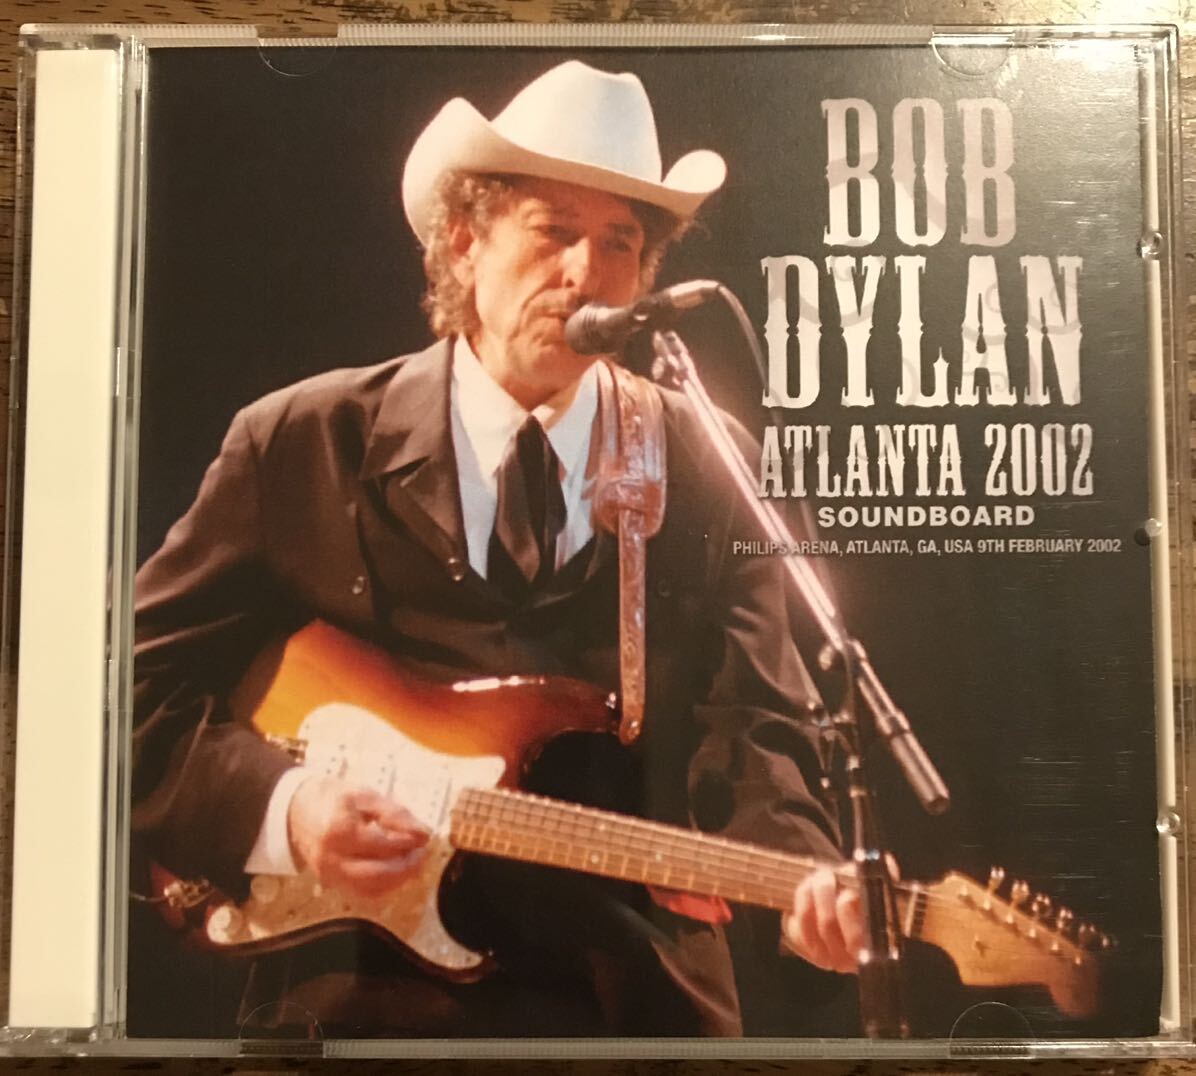 Bob Dylan / Atlanta 2002 Soundboard / 2CDR / Philip’s Arena, Atlanta, GA, 9th February 2002 / Stereo Soundboard Recording / ボブの画像1